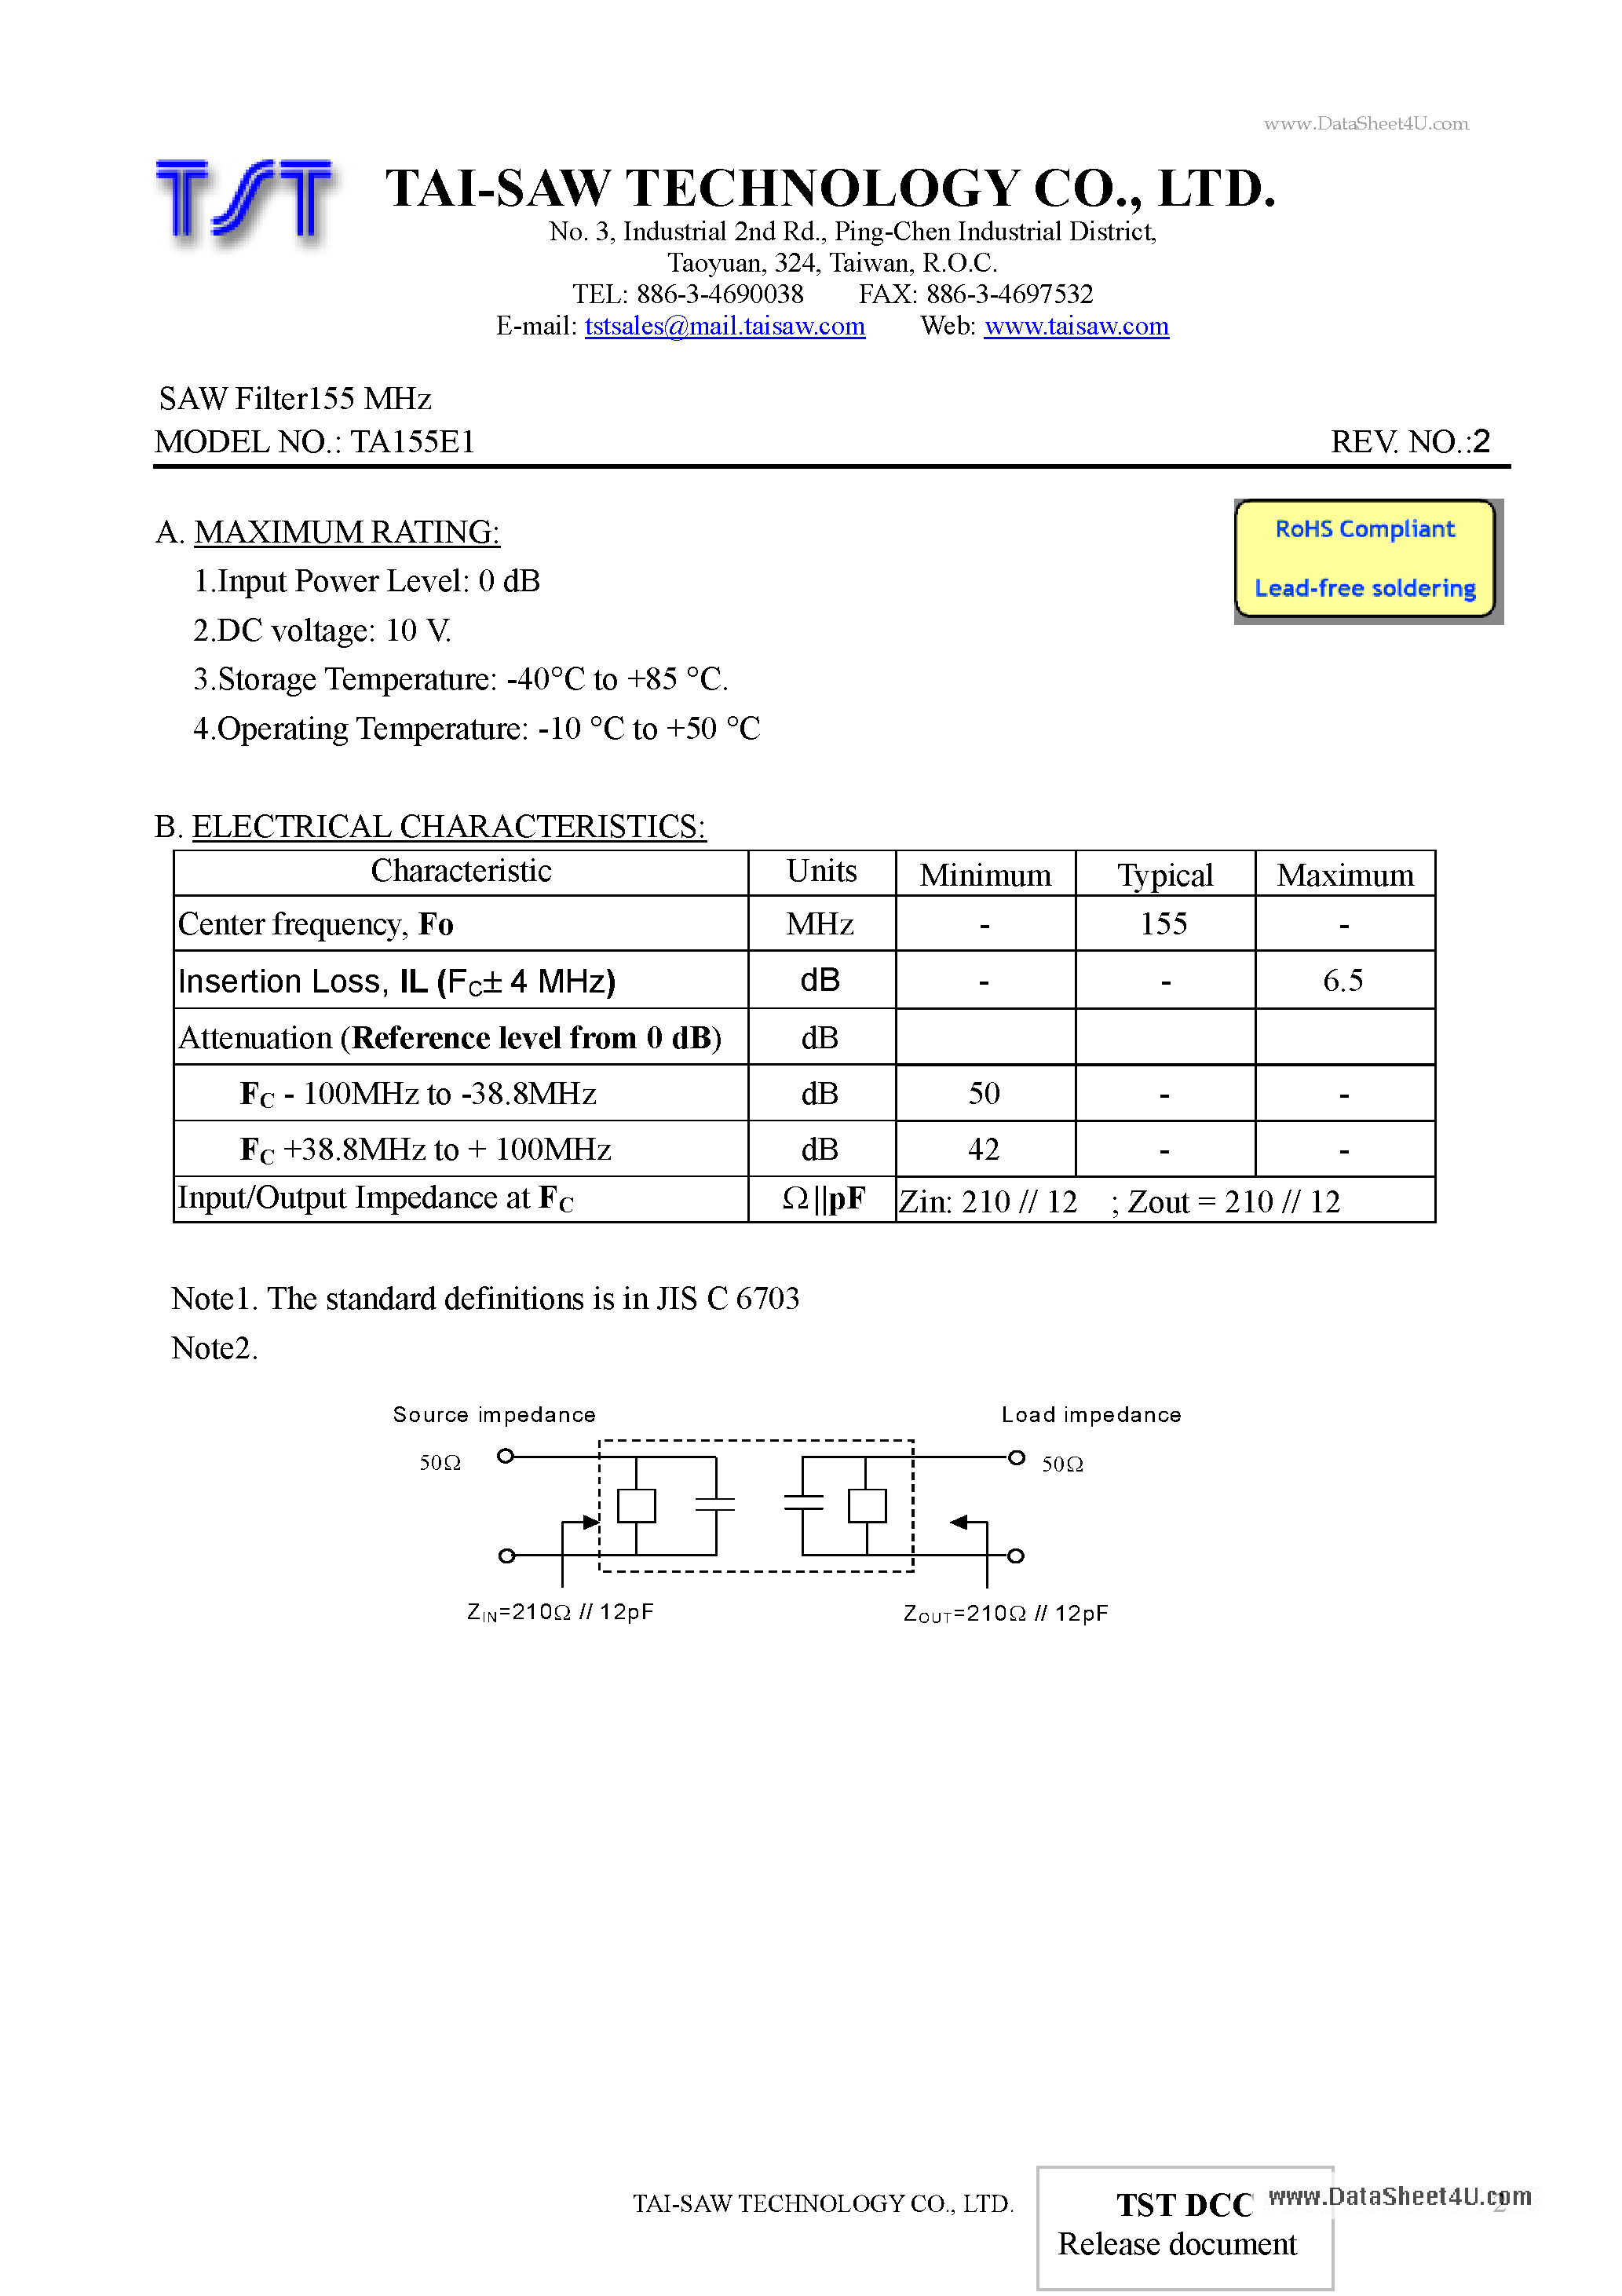 Datasheet TA155E1 - SAW Filter page 2